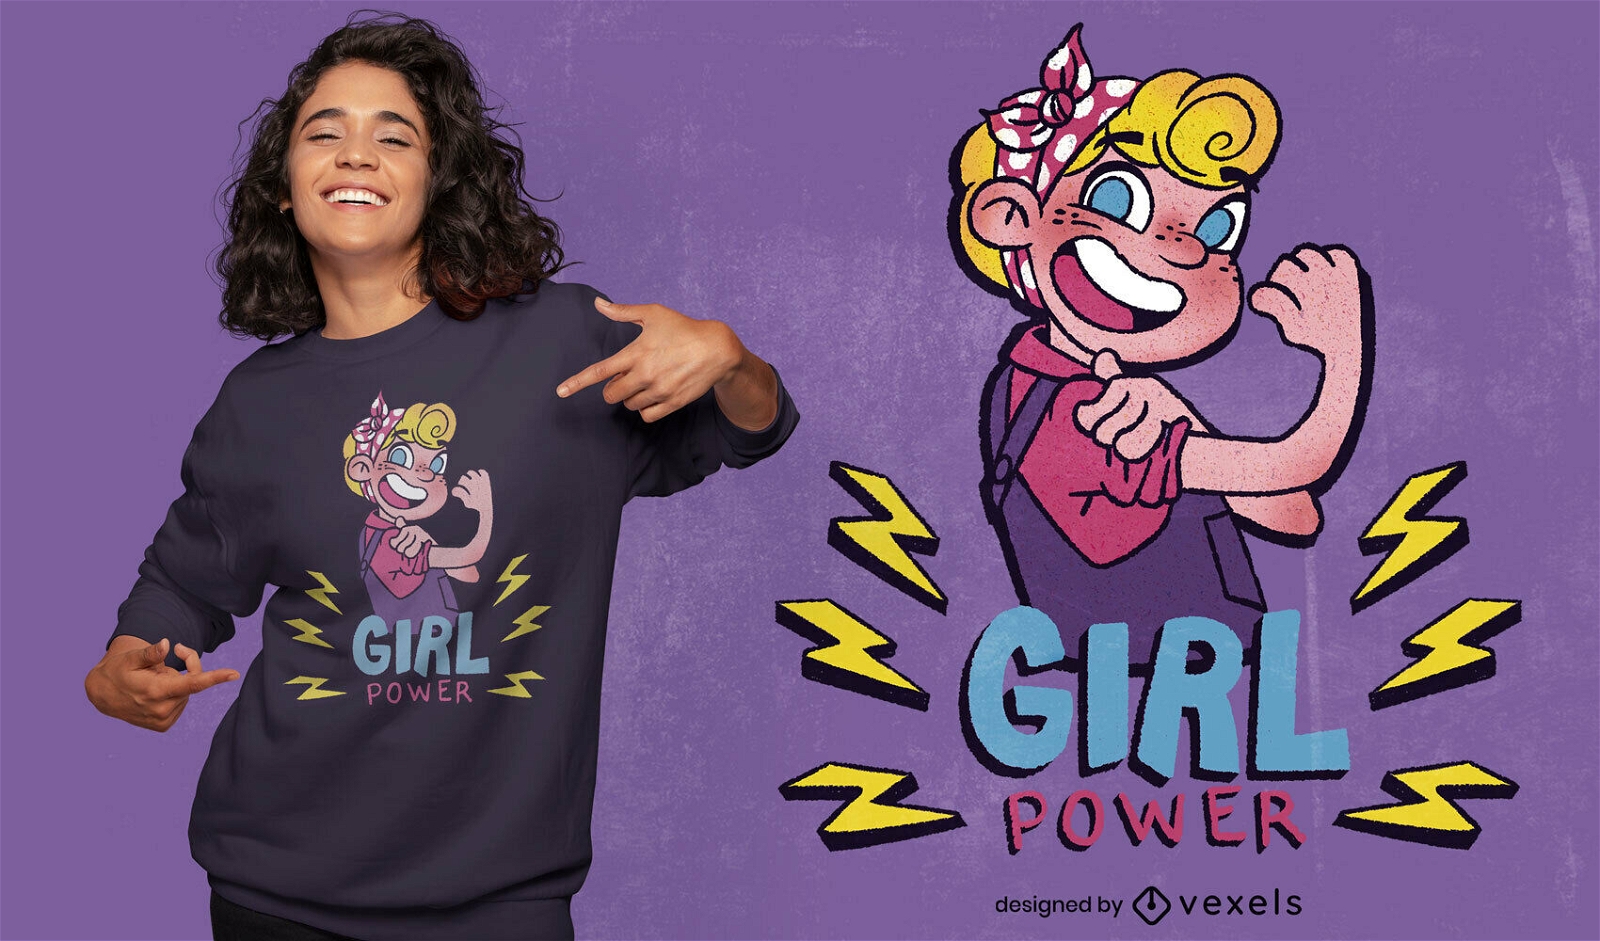 https://images.vexels.com/content/260490/preview/strong-girl-power-cartoon-t-shirt-psd-479e15.png